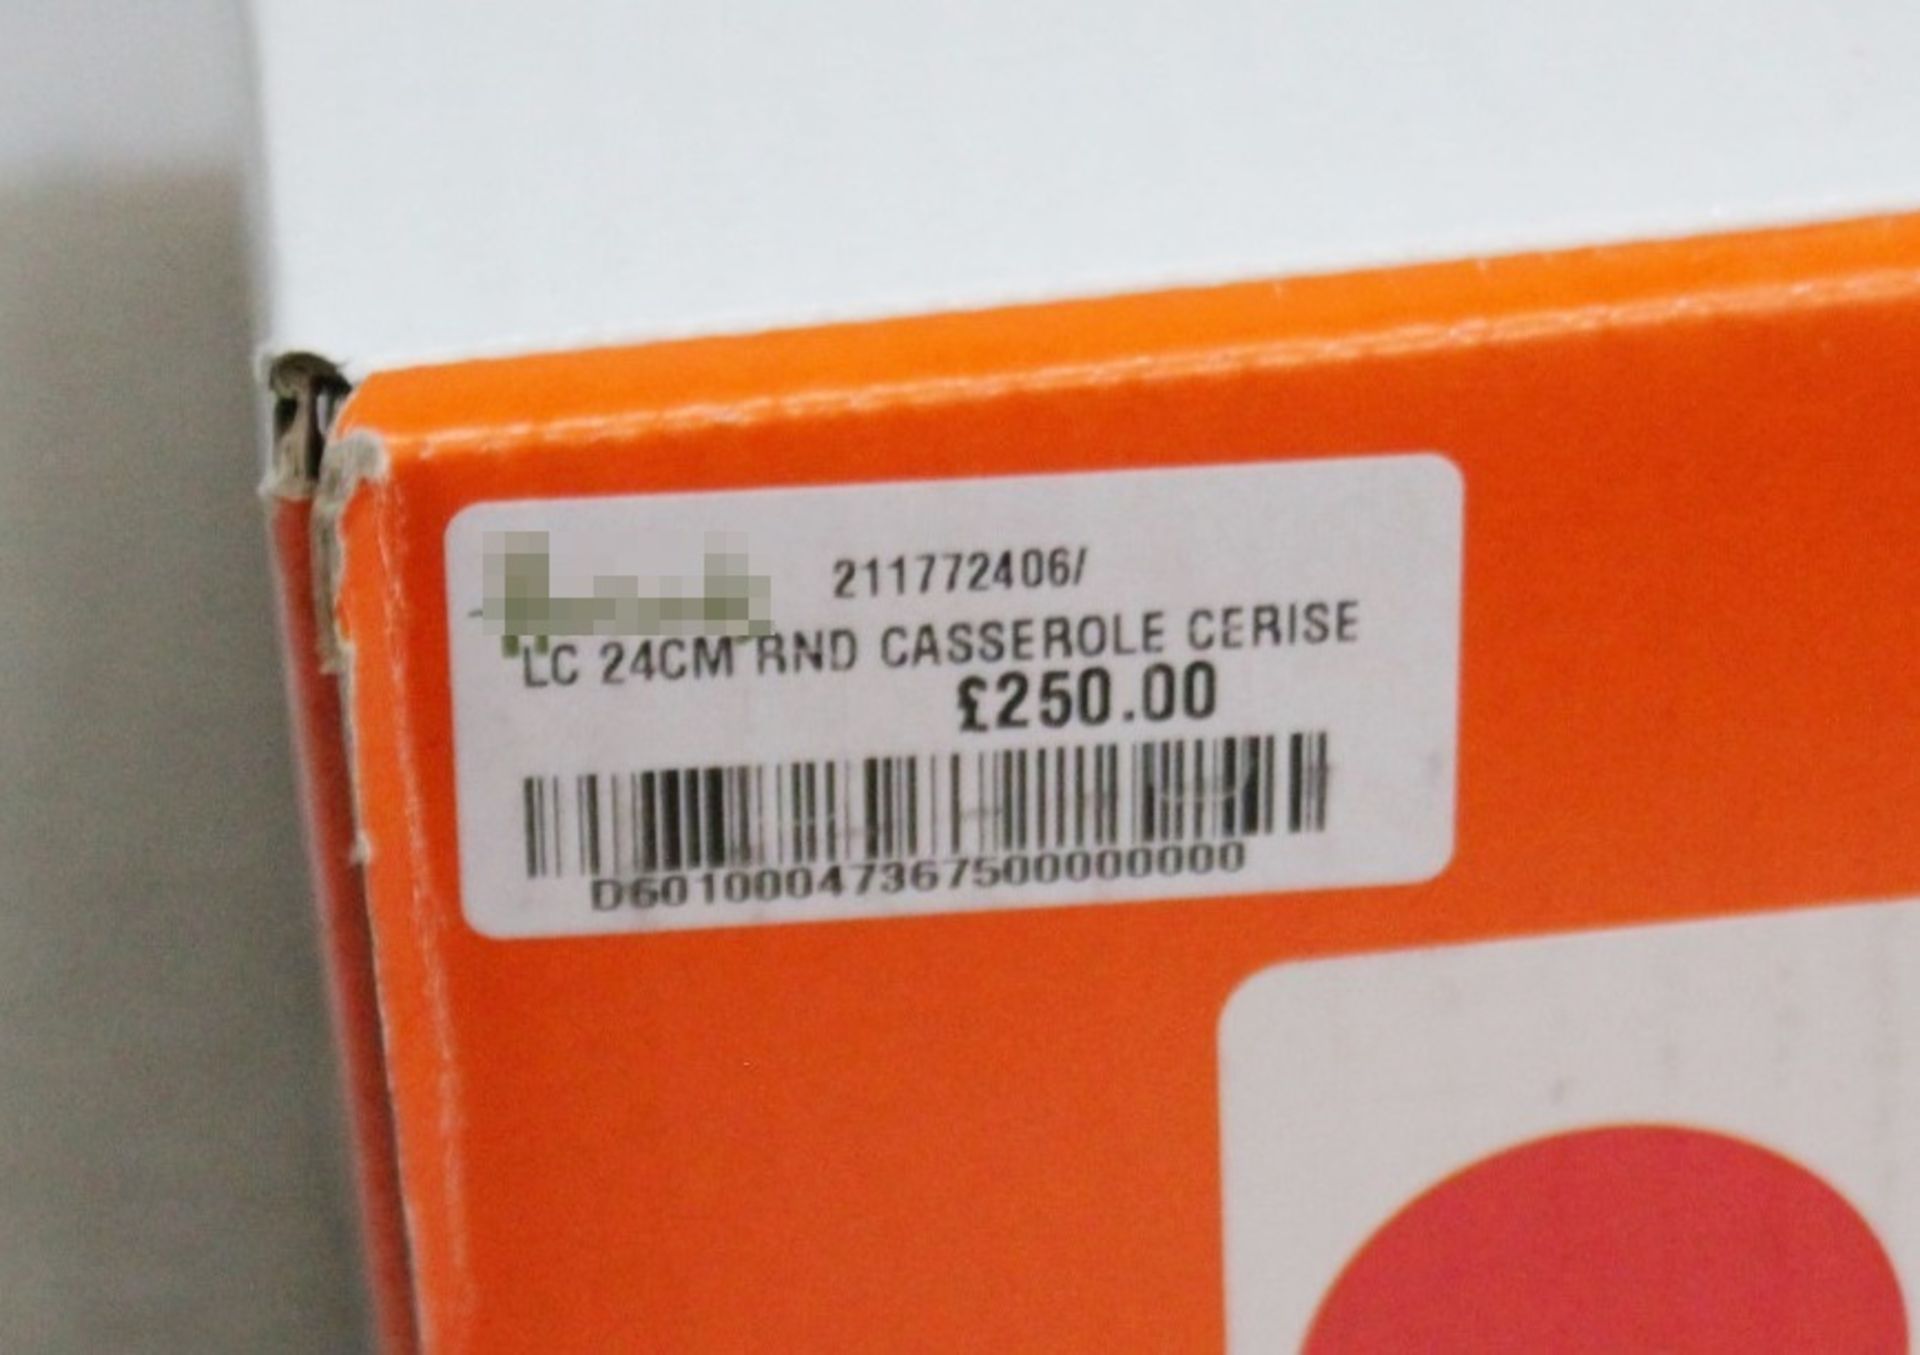 1 x LE CREUSET Enamelled Cast Iron 24cm Rnd Casserole Cerise - Original Price £250.00 - Boxed Stock - Image 5 of 5